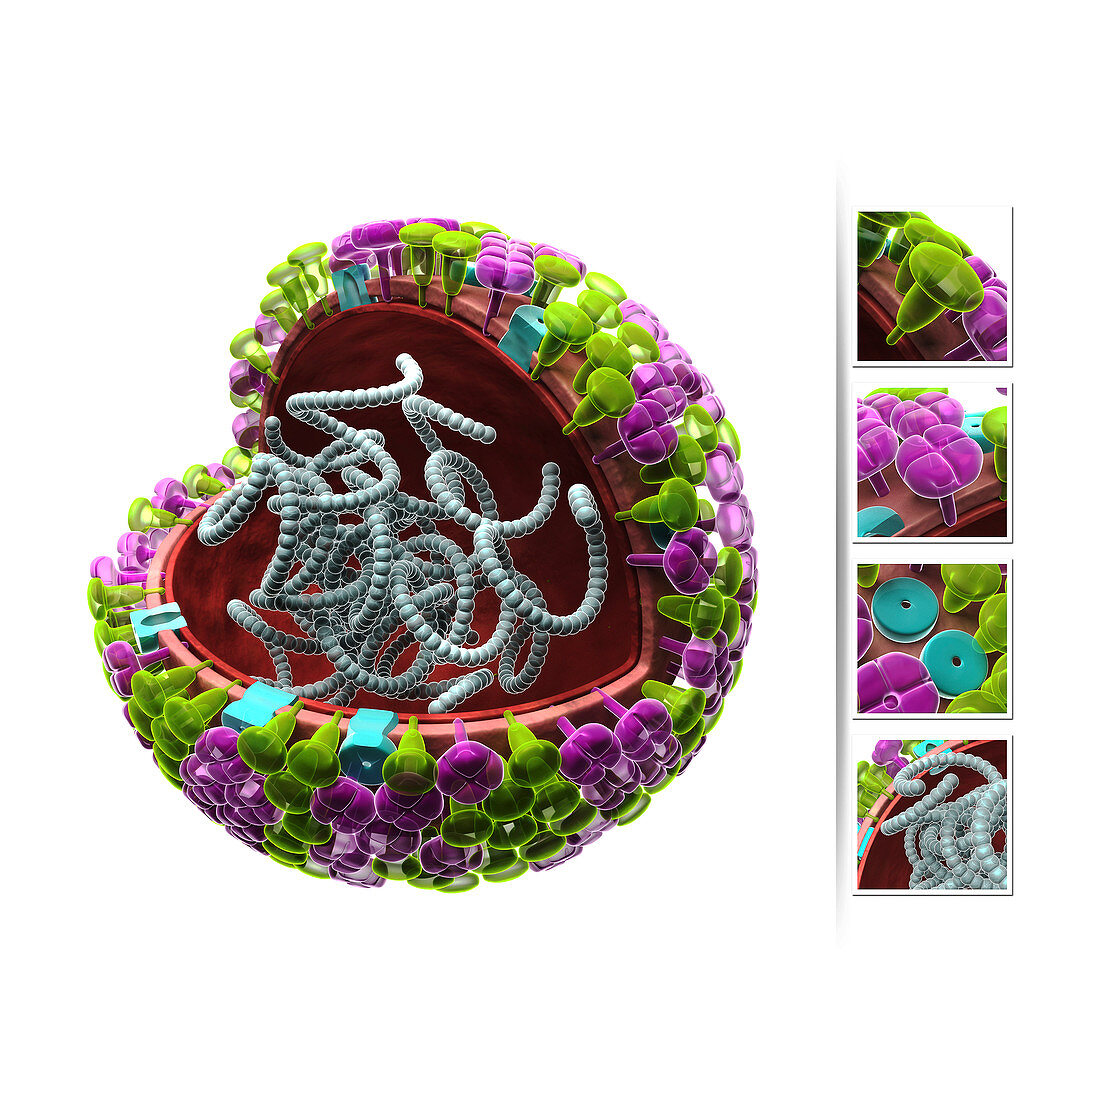 Influenza virus structure,illustration